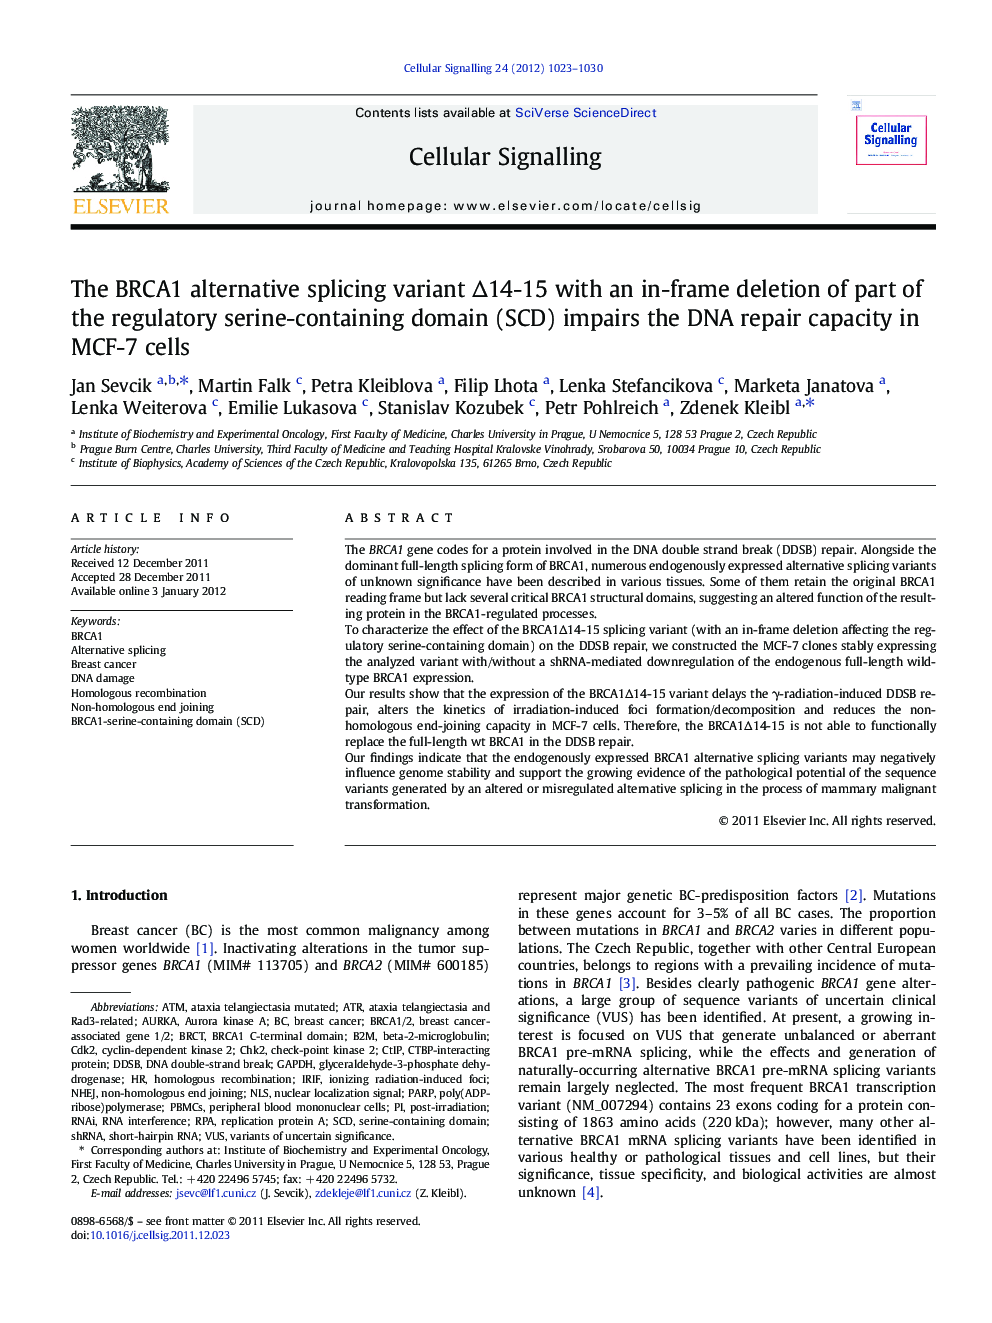 The BRCA1 alternative splicing variant Î14-15 with an in-frame deletion of part of the regulatory serine-containing domain (SCD) impairs the DNA repair capacity in MCF-7 cells